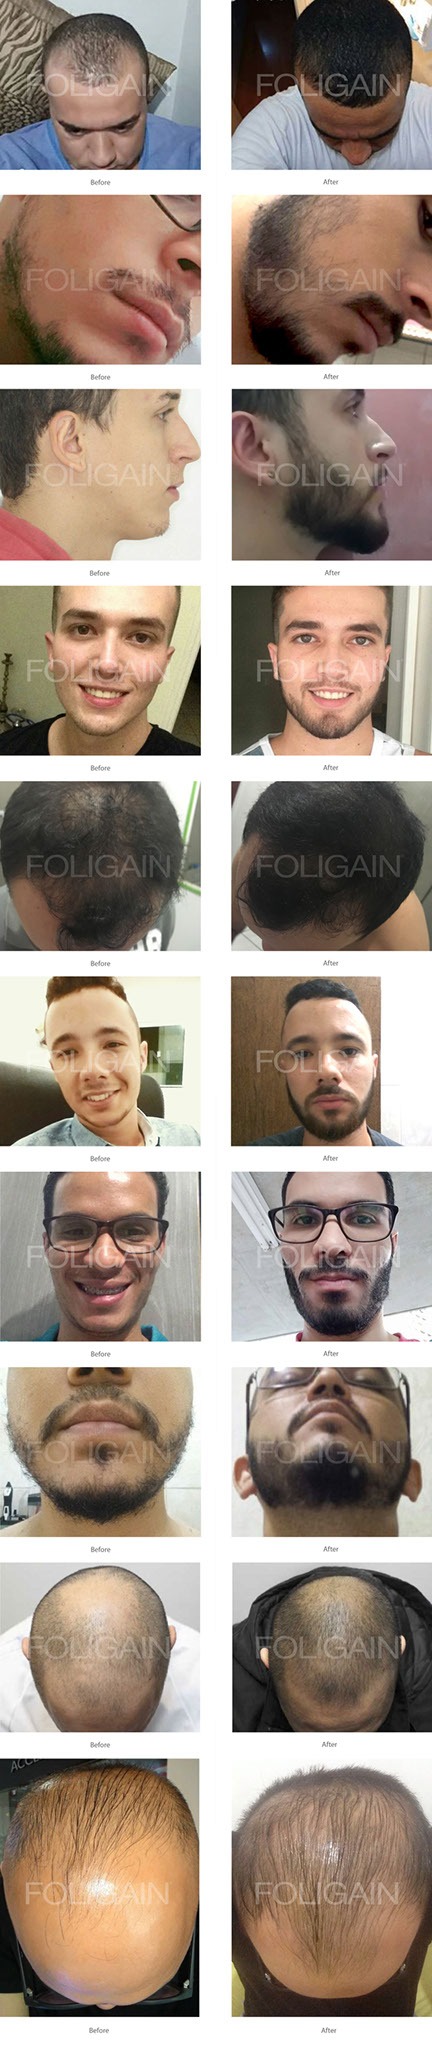 FOLIGAIN 5% Hair Regrowth Treatment